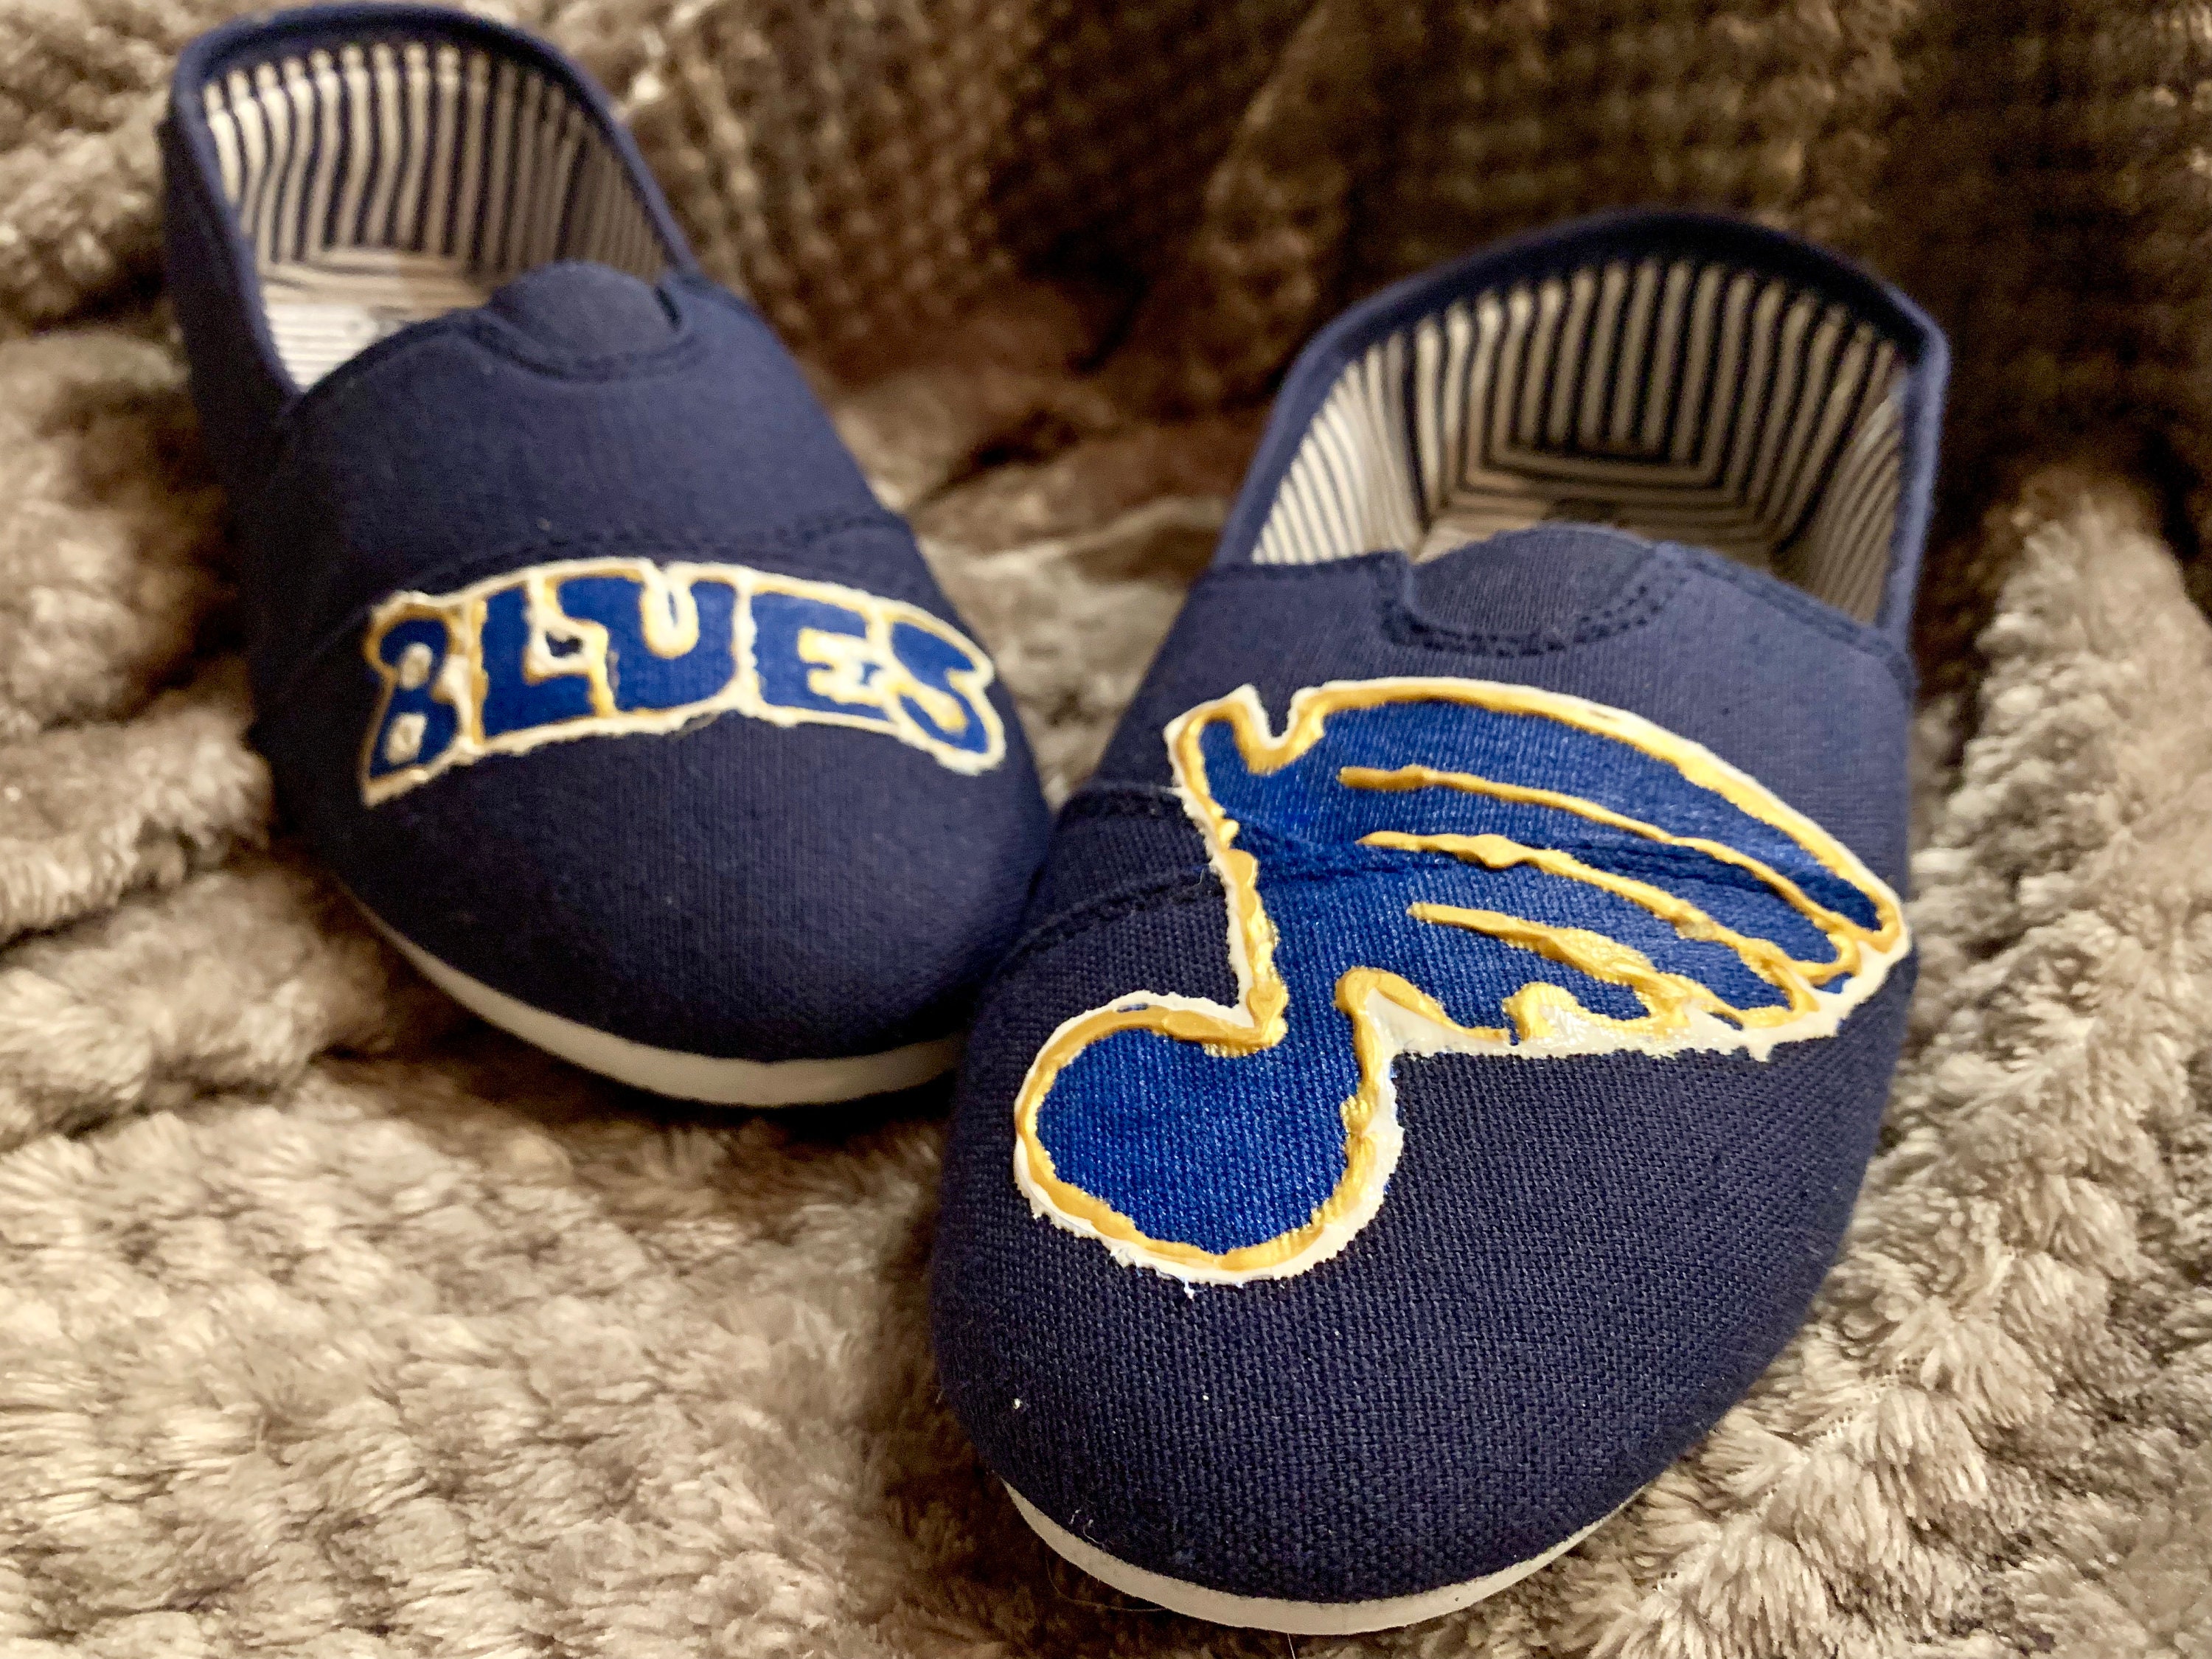 Women’s E-LOV ST LOUIS BLUES HOCKEY Tennis Shoes Sneakers SIZE 7.5 US 40  EURO